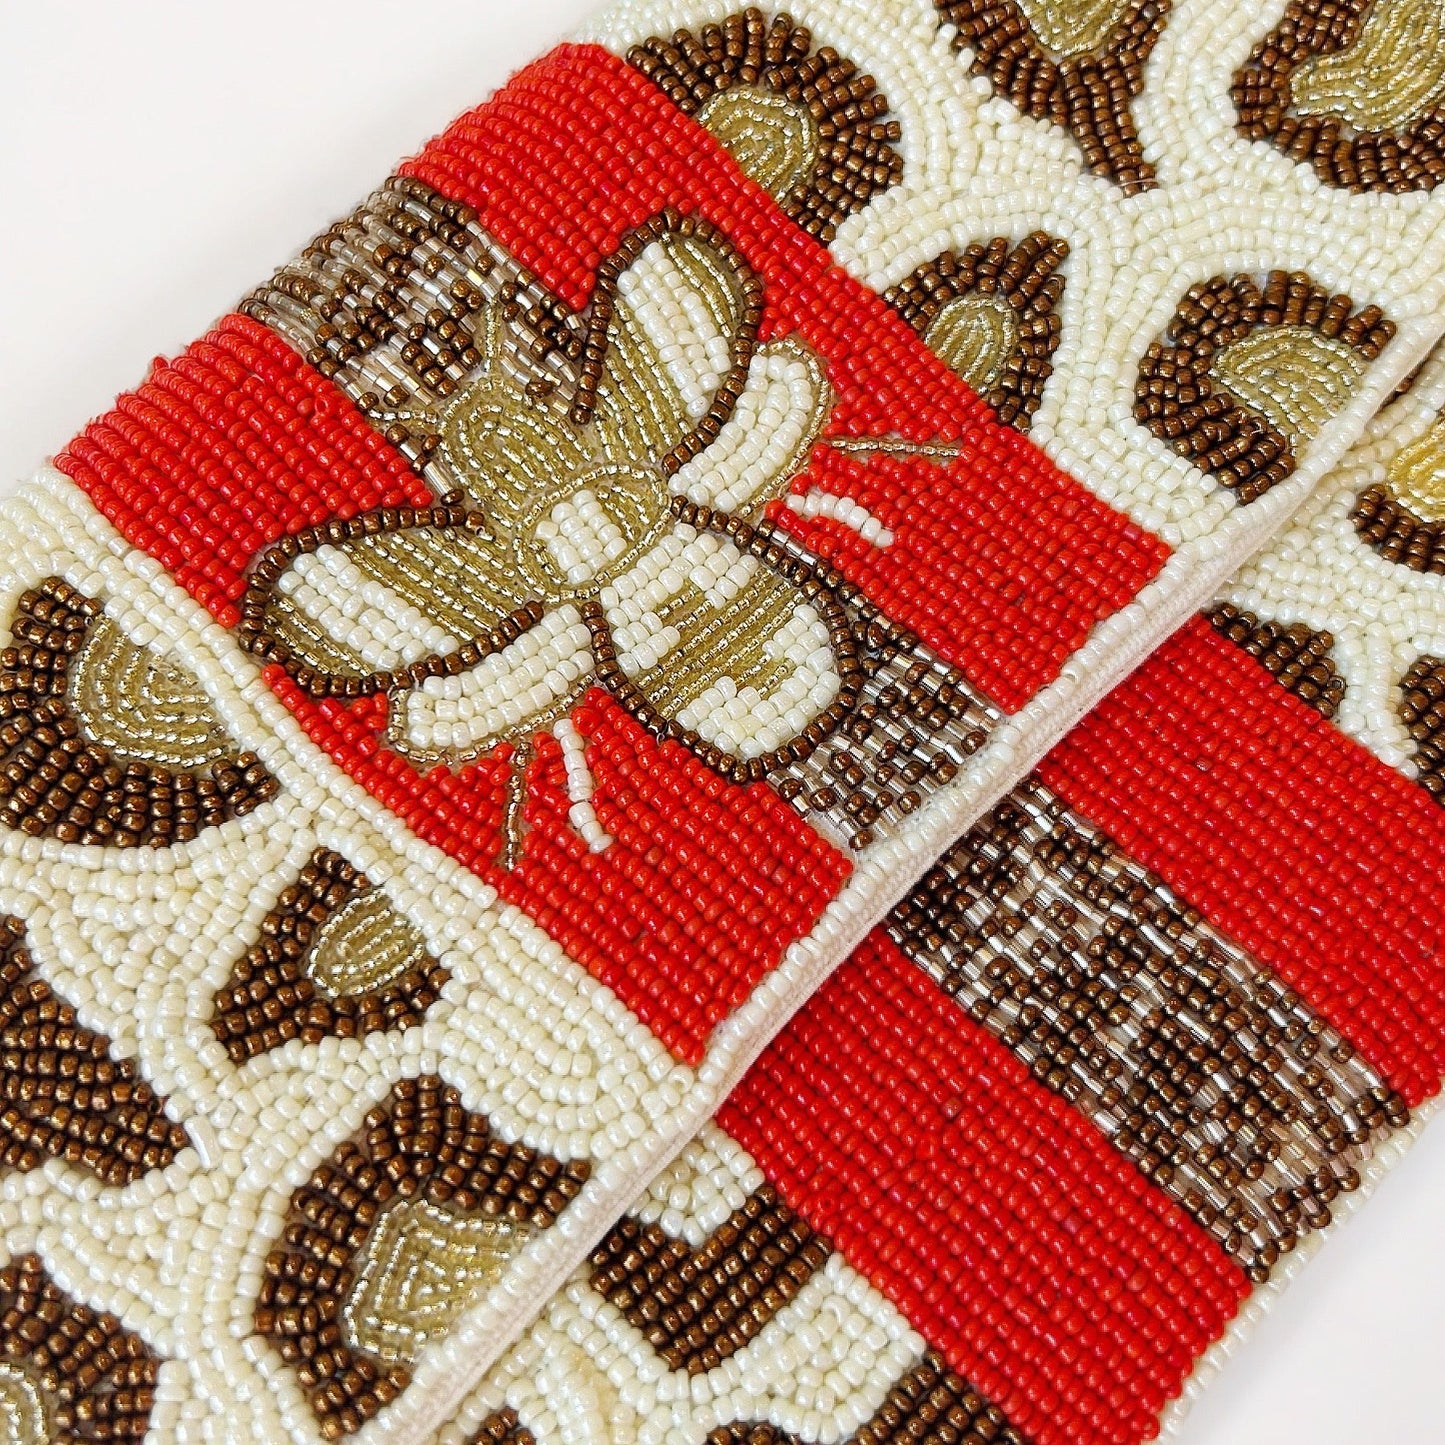 Beaded Brown & Red Leopard Handbag - Boho Mamma Store